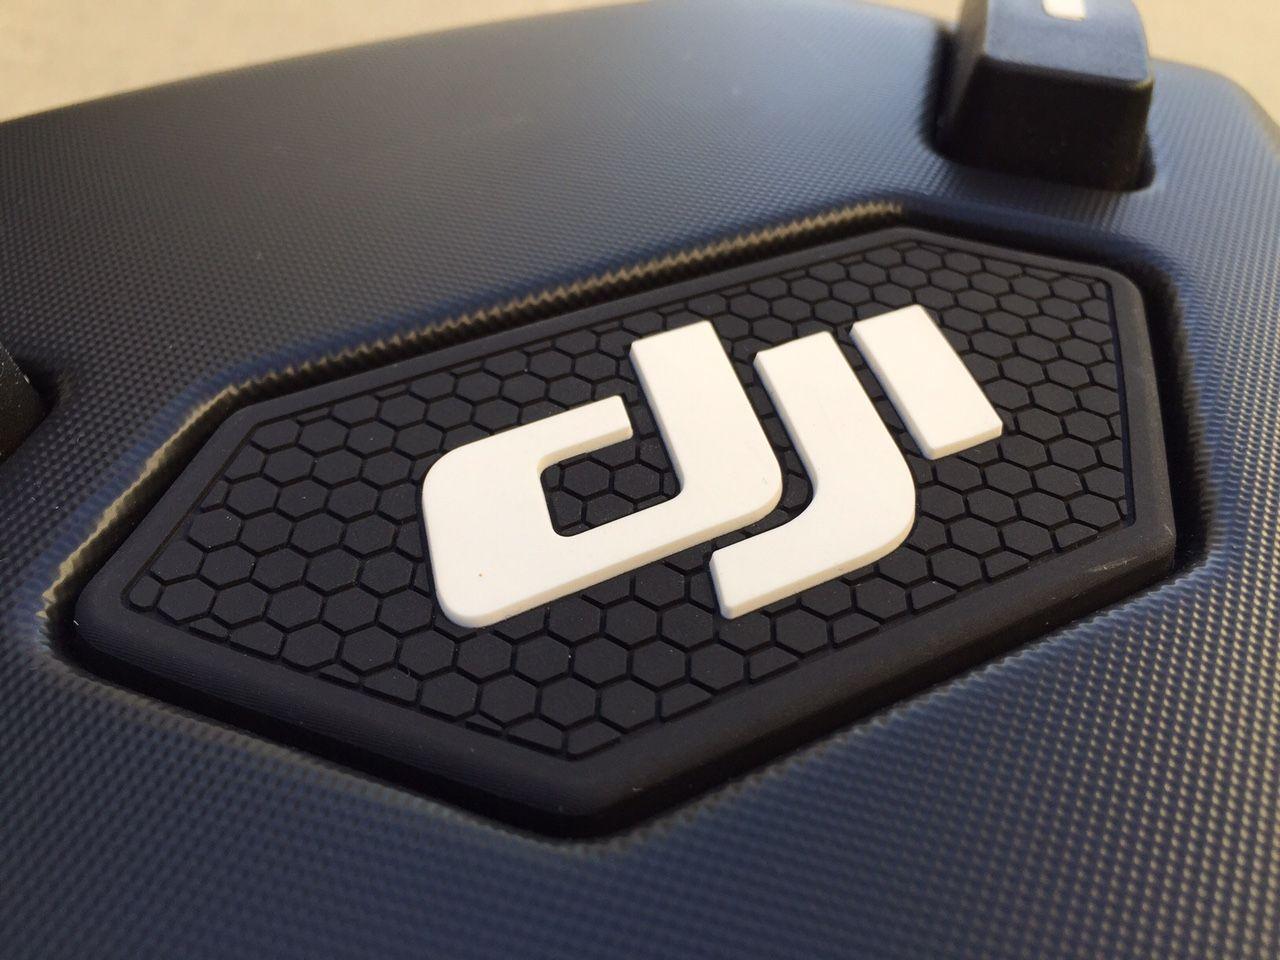 DJI Logo - Hardshell Backpack now has DJI logo. DJI Phantom Drone Forum